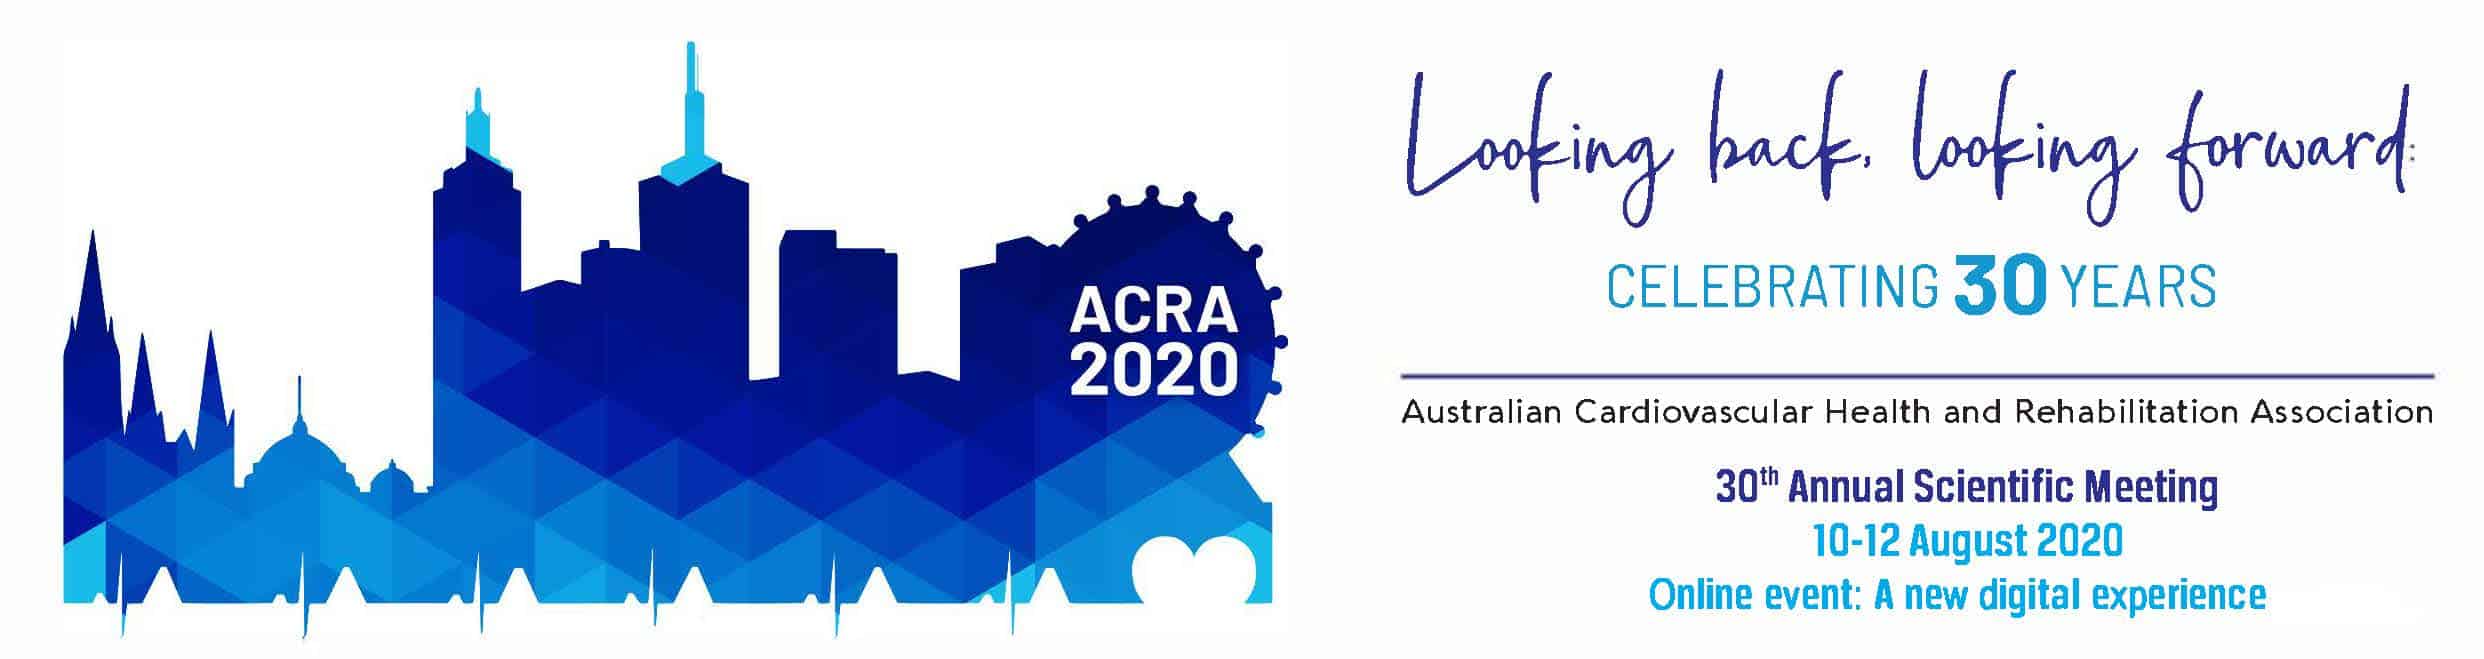 ACRA 2020 Banner_Final_Online